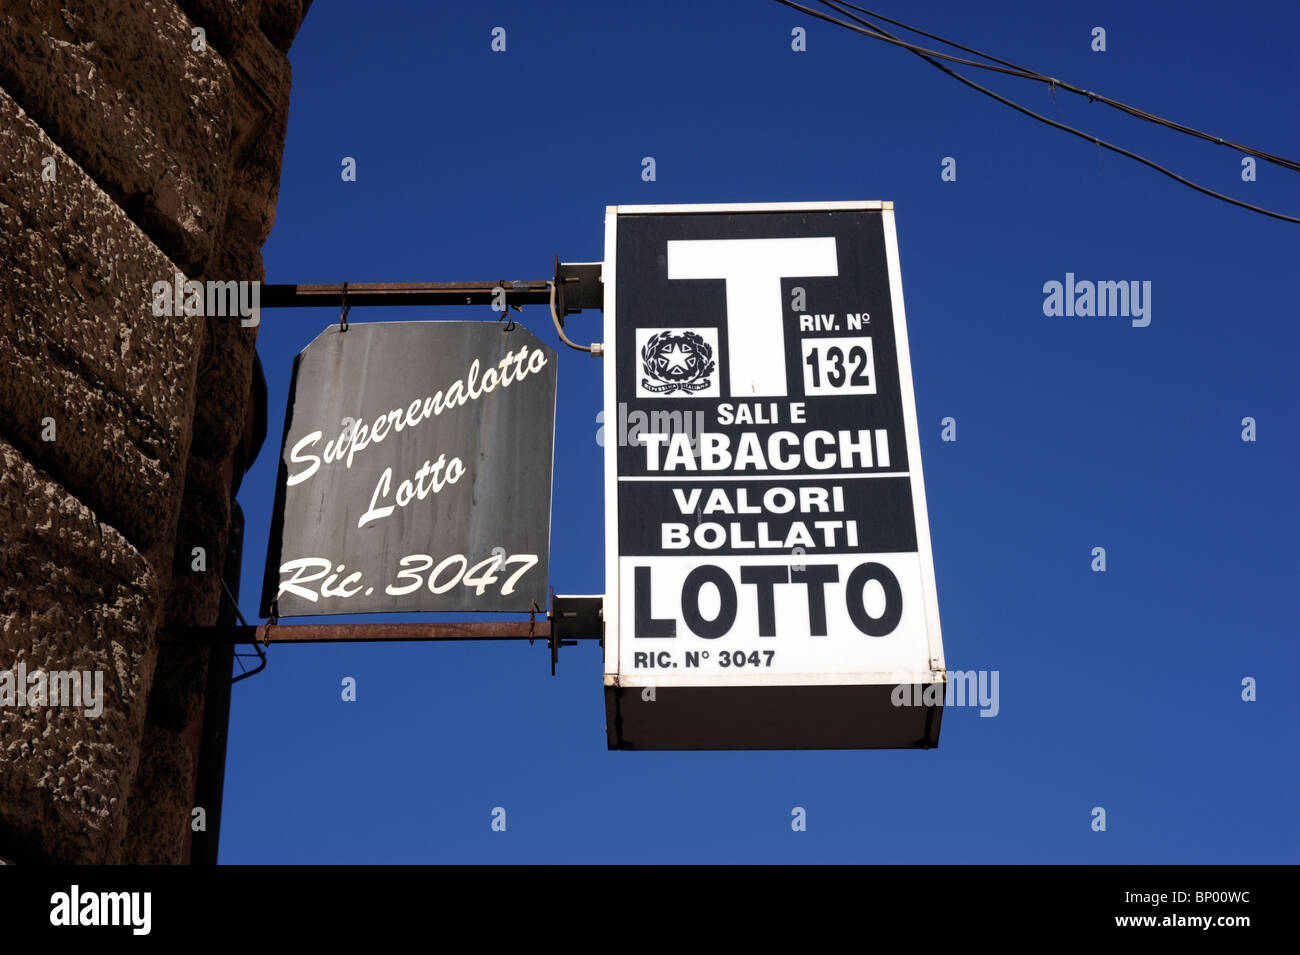 Italien, Rom, Tabacchi, Tabacchi, Tabak-Schilder aus nächster Nähe Stockfoto